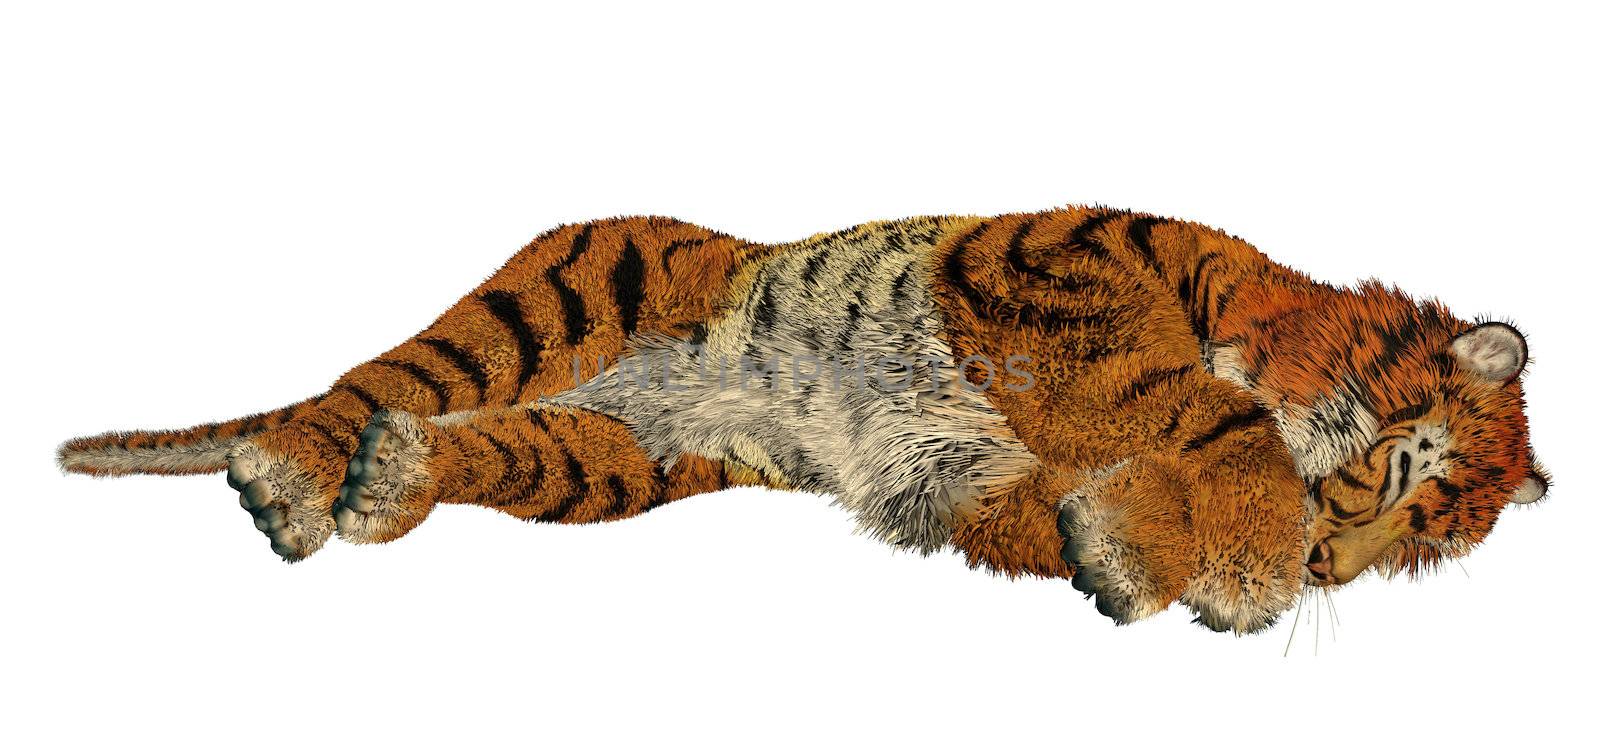 Tiger sleeping by Elenaphotos21